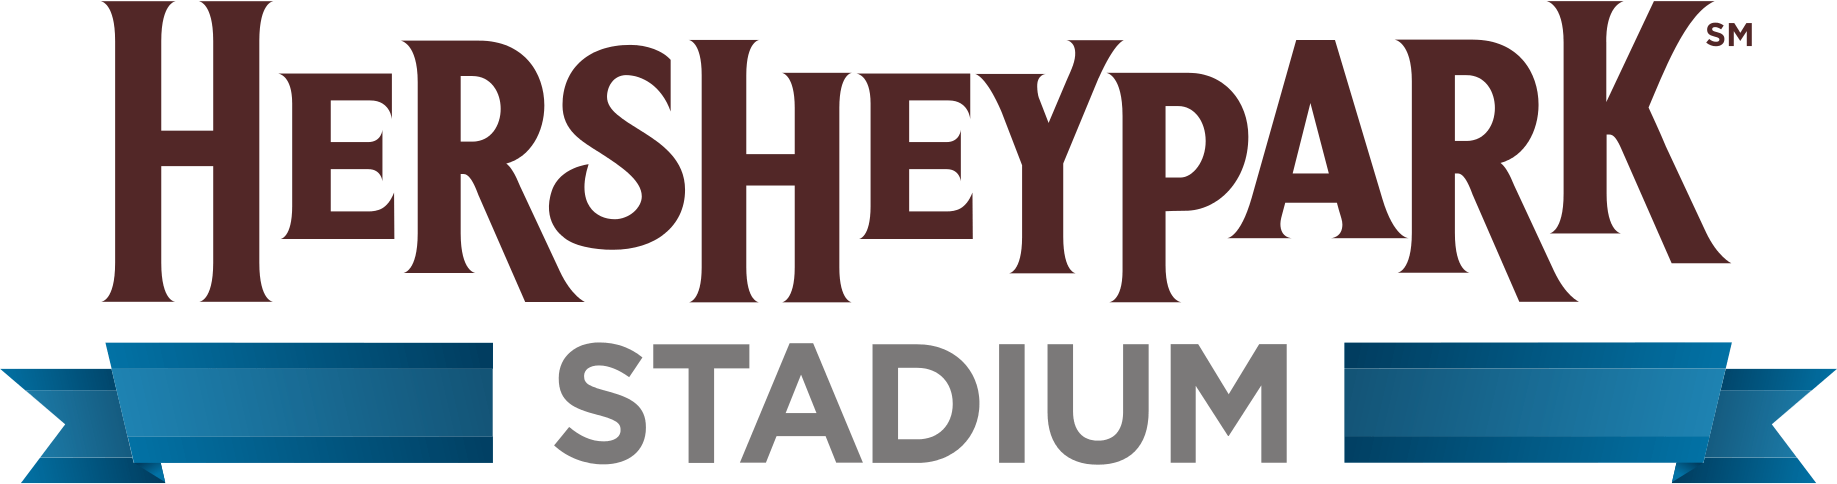 Hersheypark Logo - Hersheypark Stadium | Logopedia | FANDOM powered by Wikia